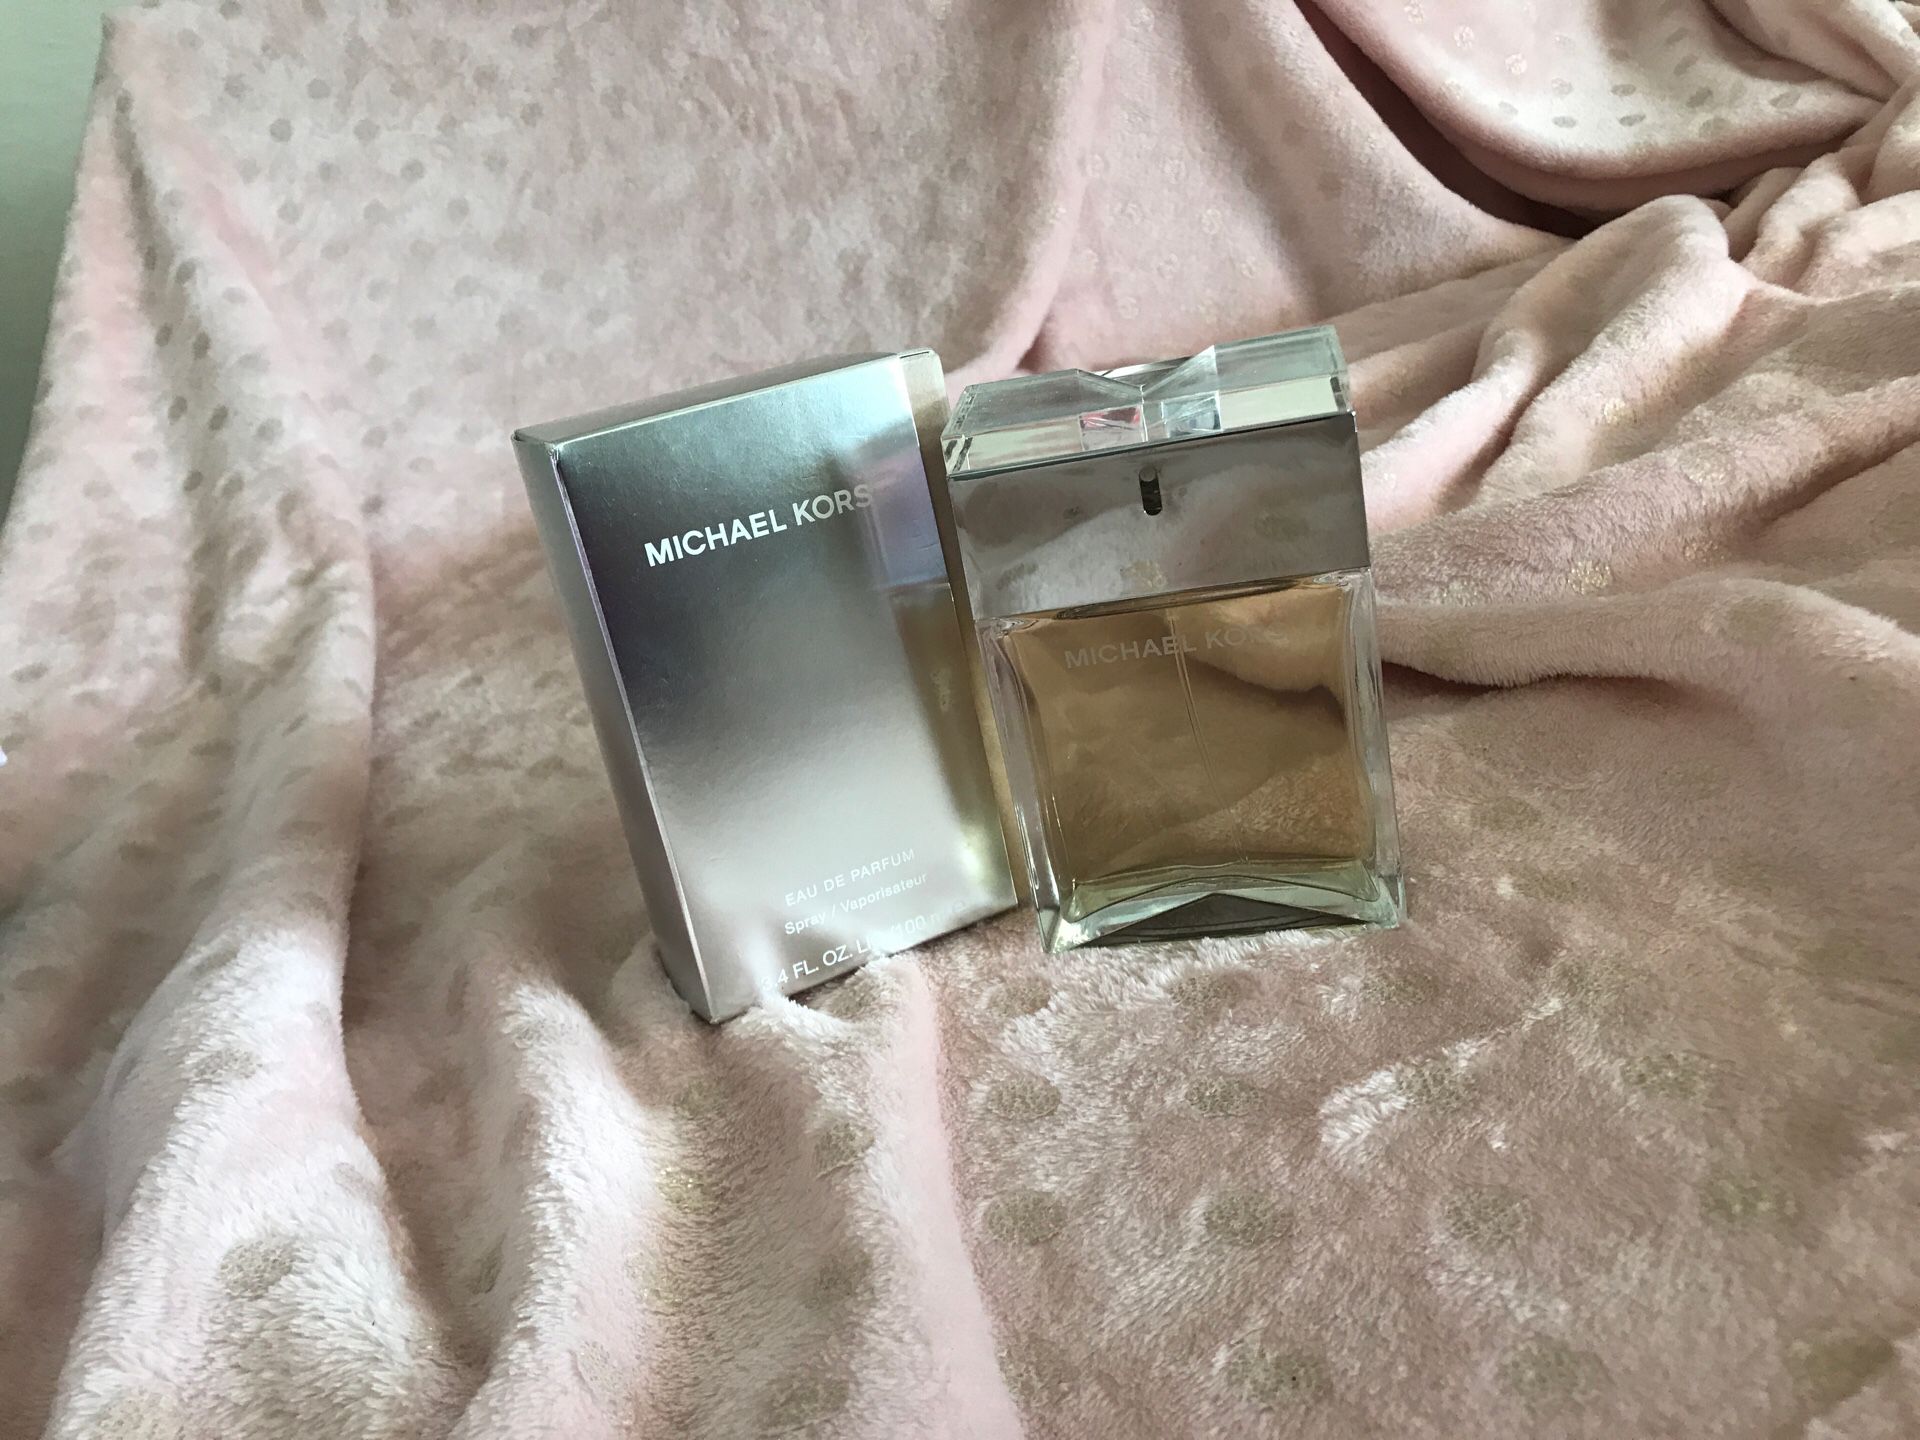 MK perfume